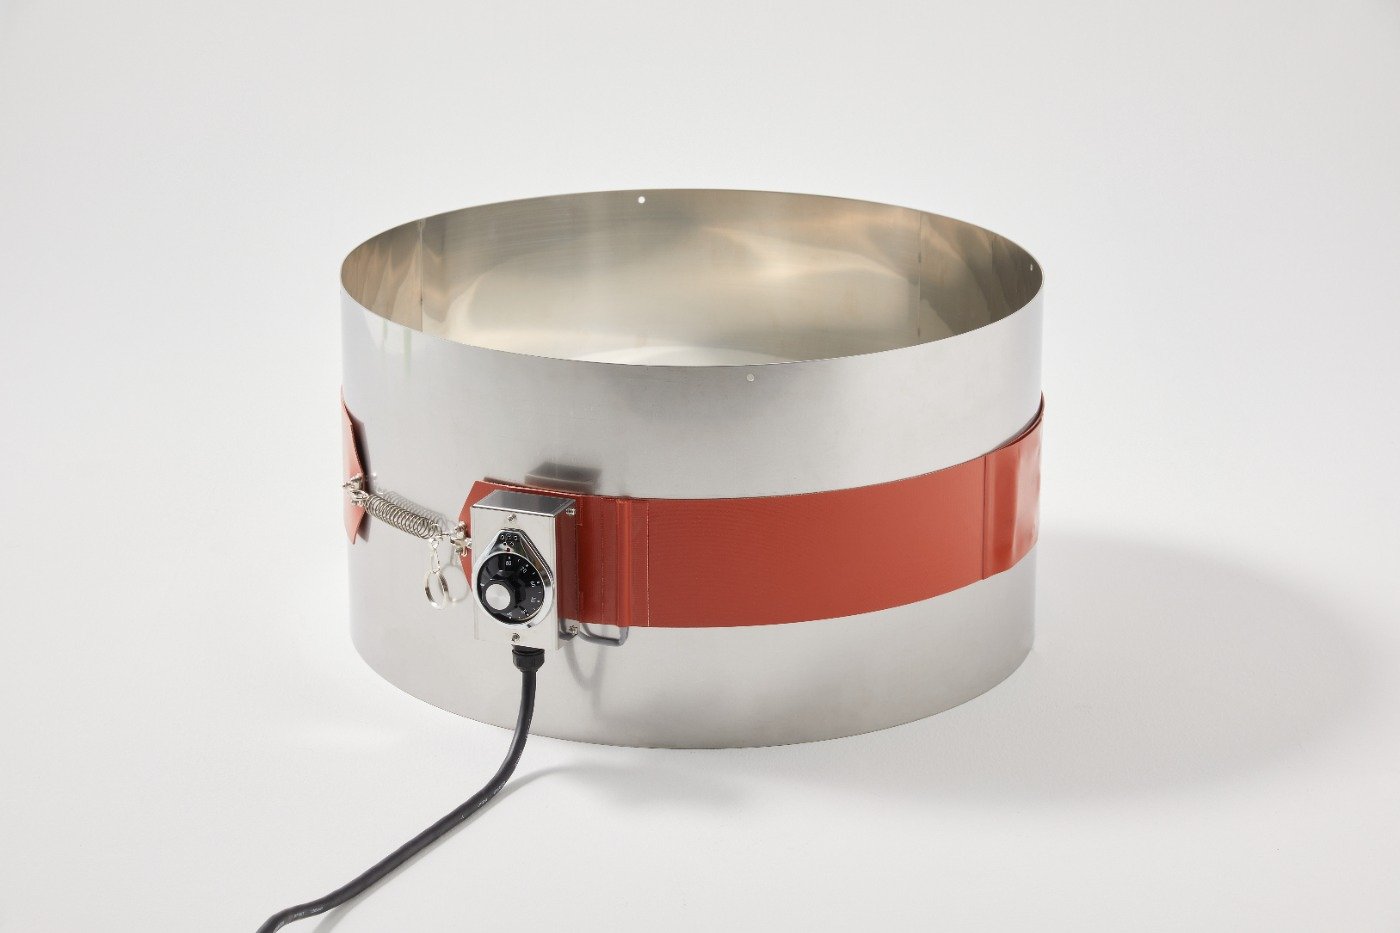 BAOSHISHANドラム缶ヒーター オーエムヒーター ドラム缶用加熱機器 加熱ベルト ノブ型 オレンジ200L110V (200L 174 - 8